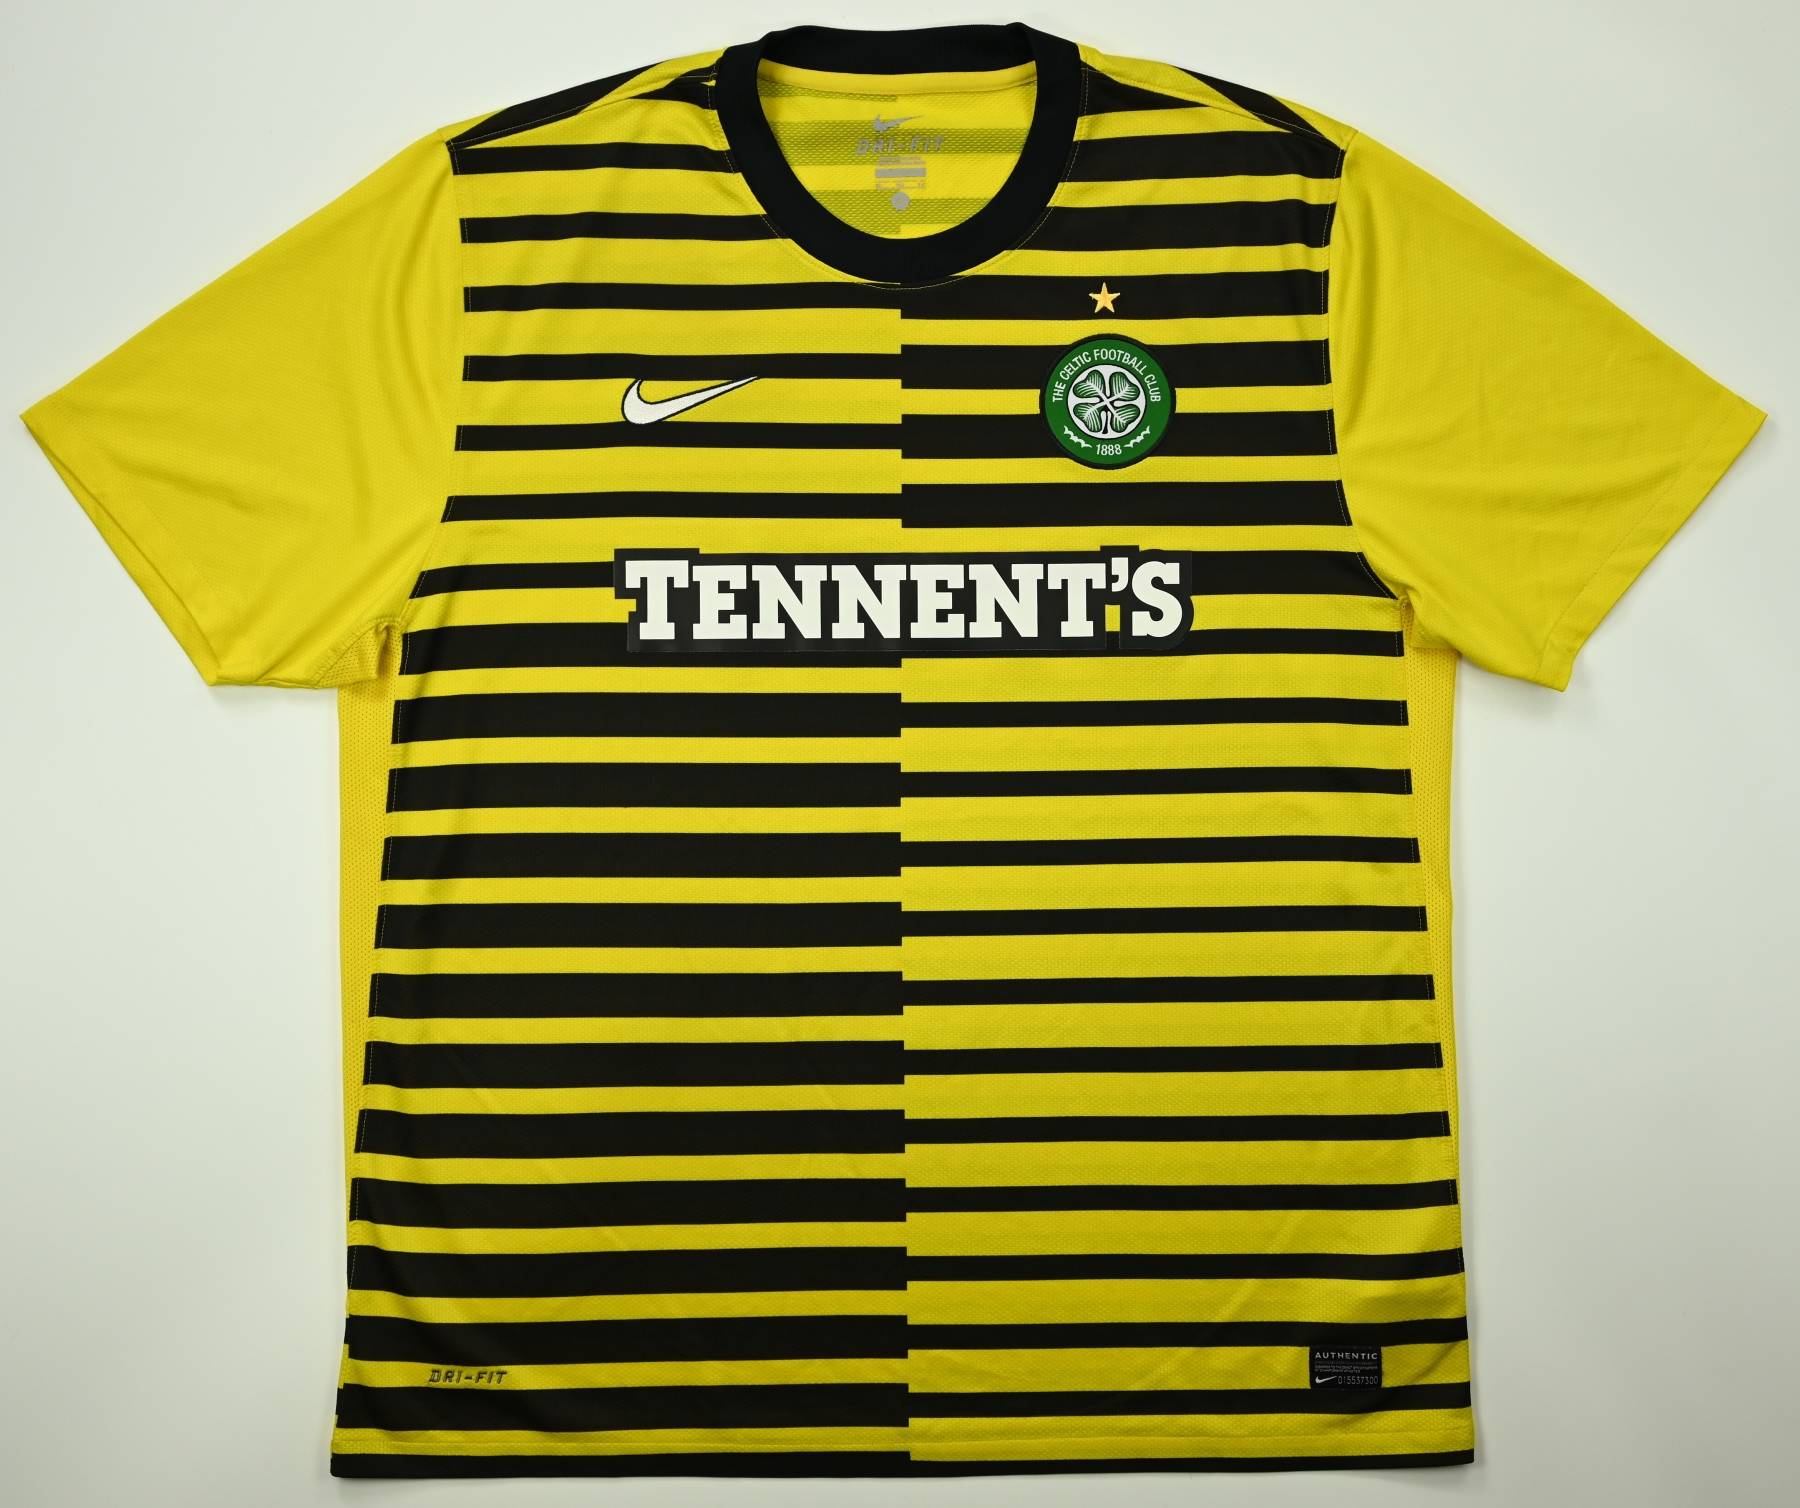 Celtic Third football shirt 2011 - 2012. Sponsored by no sponsor